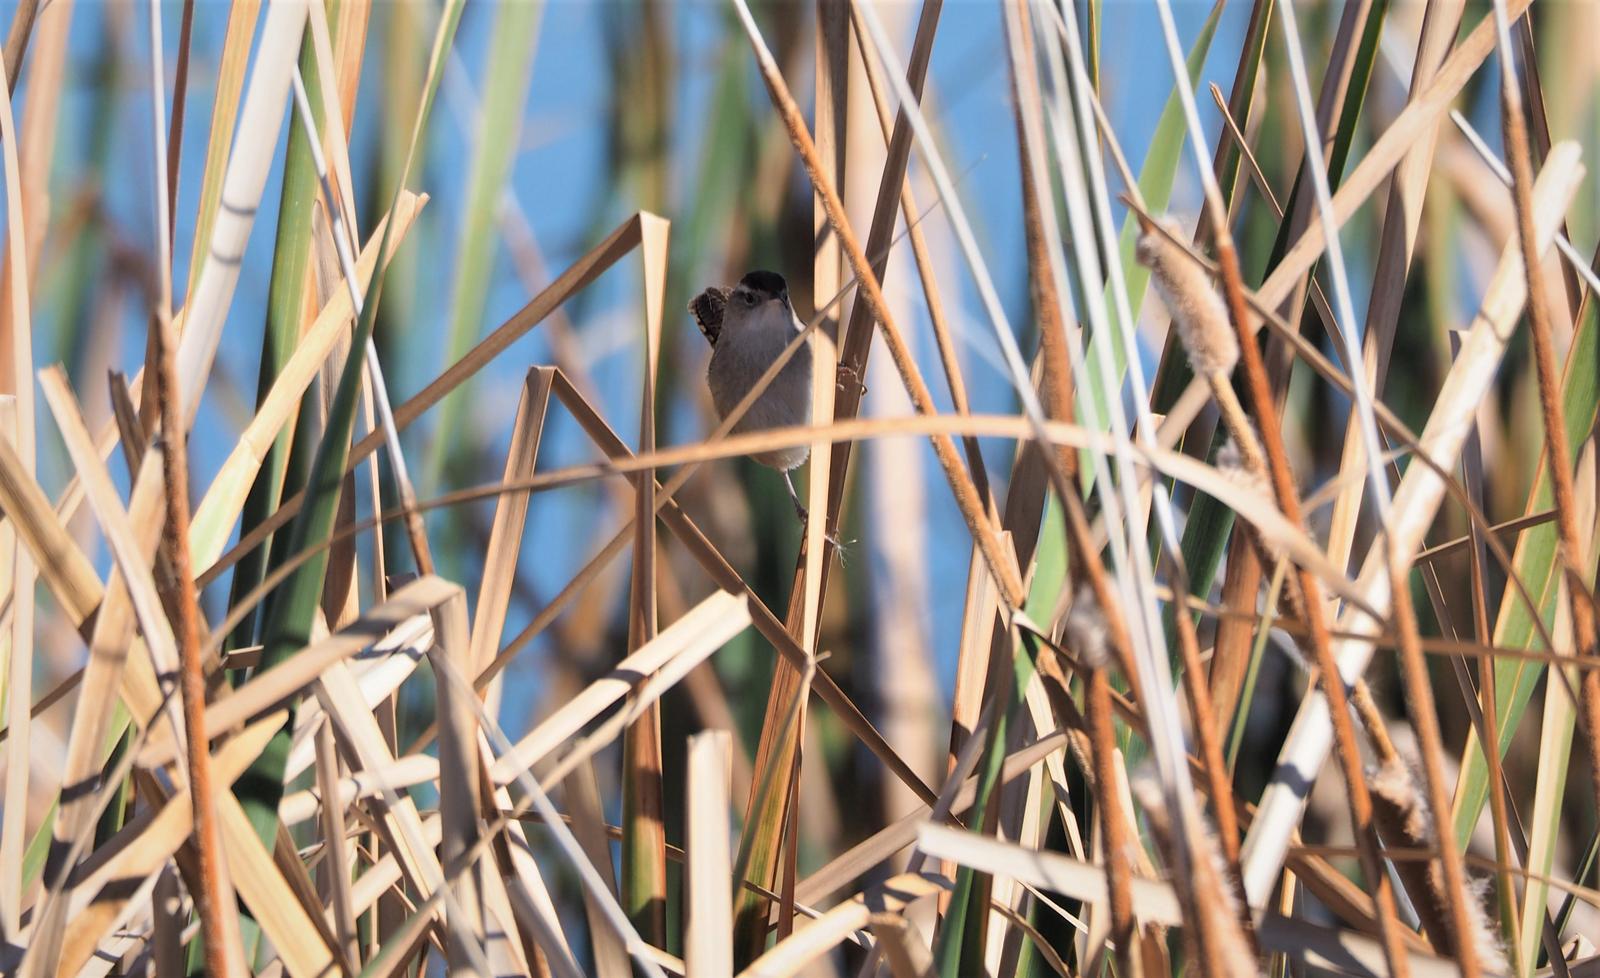 Marsh Wren Photo by Colin Hill